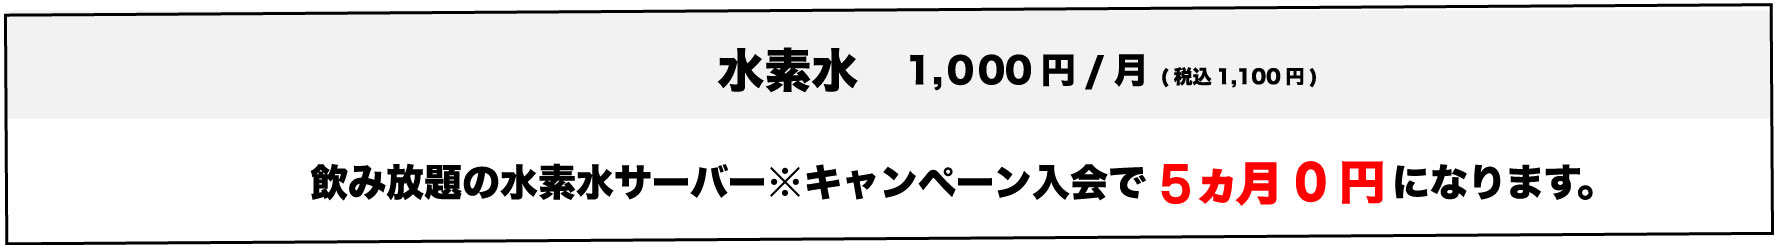 水素水1000円